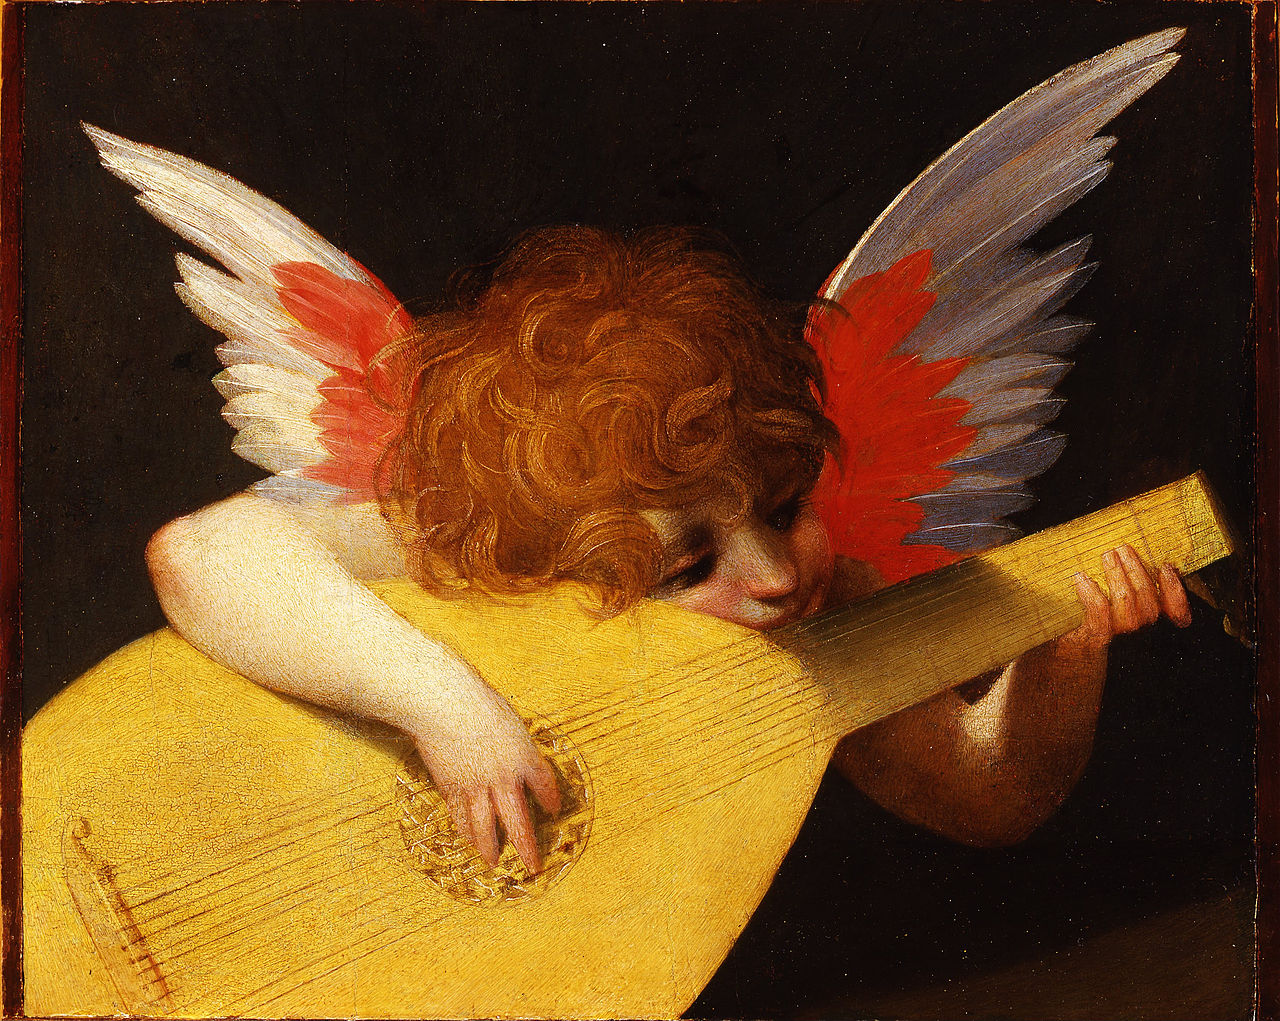 音樂天使 by Rosso Fiorentino - 1522 - 141 x 172 cm 